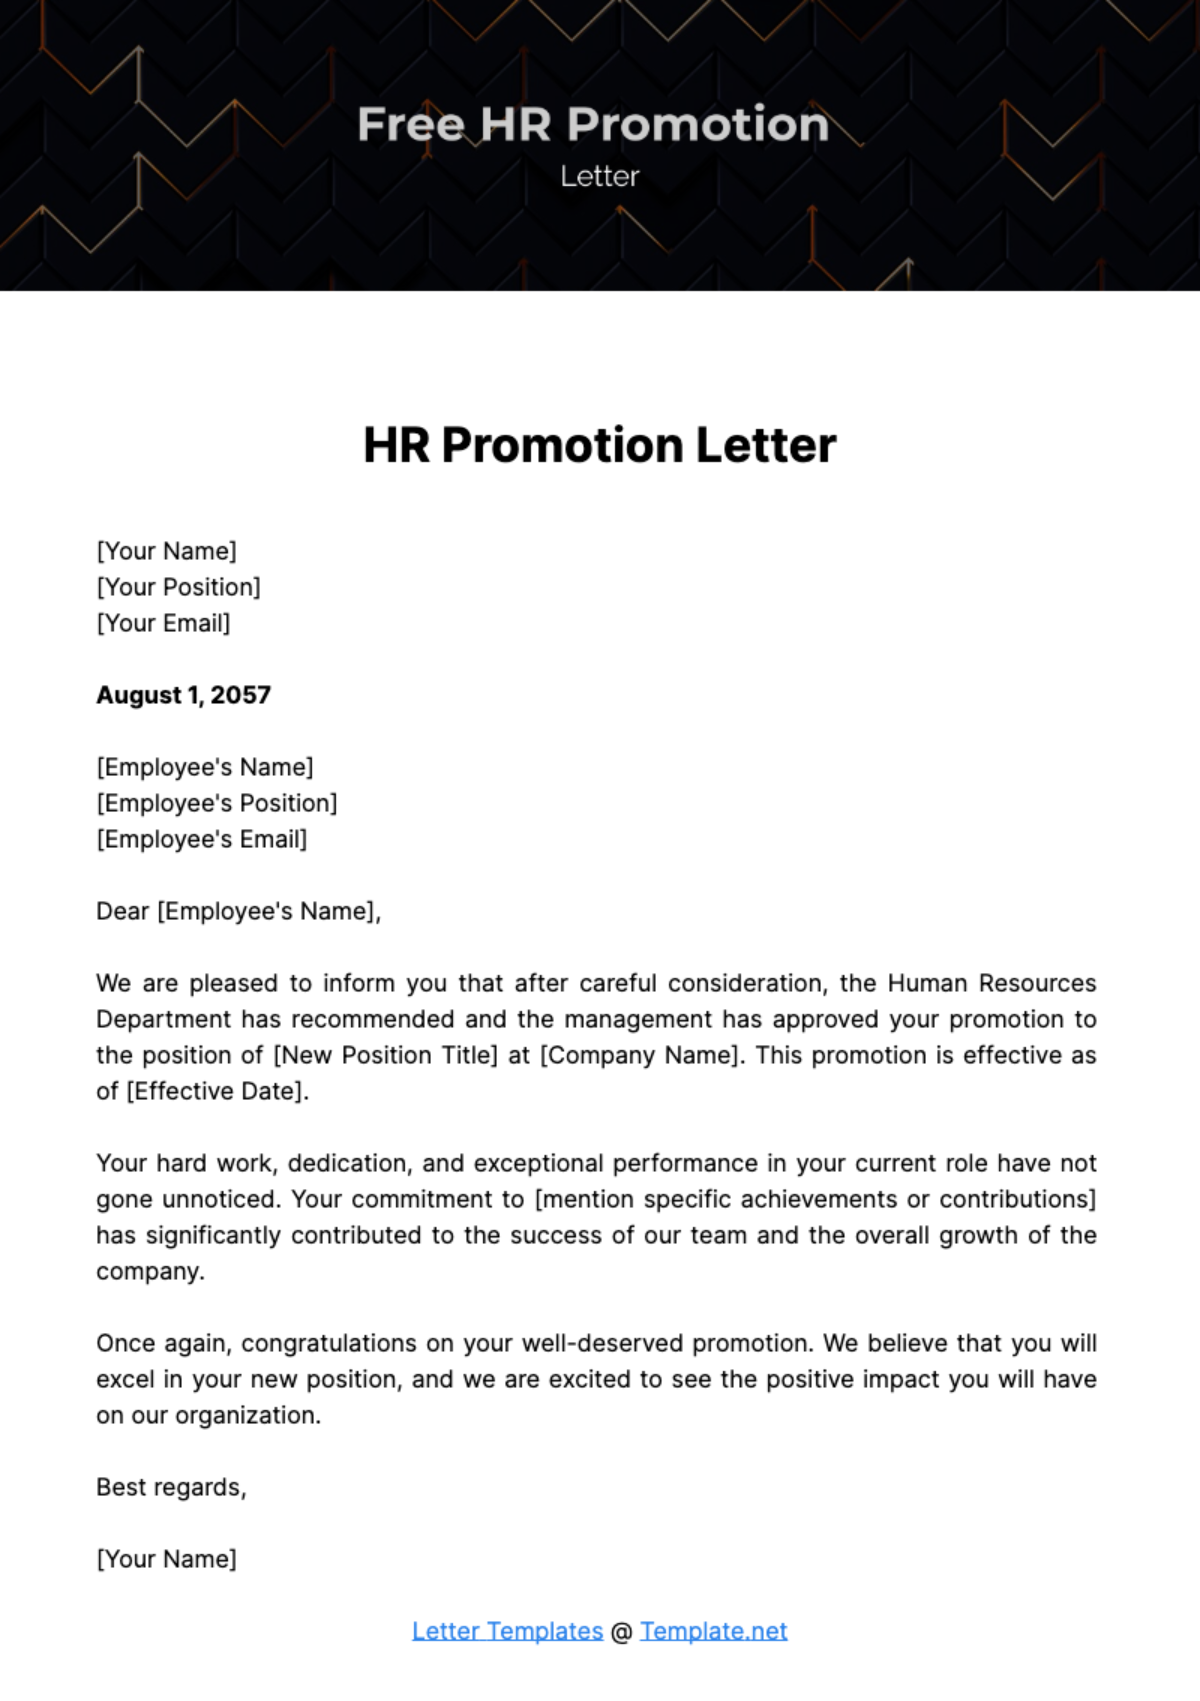 HR Promotion Letter Template